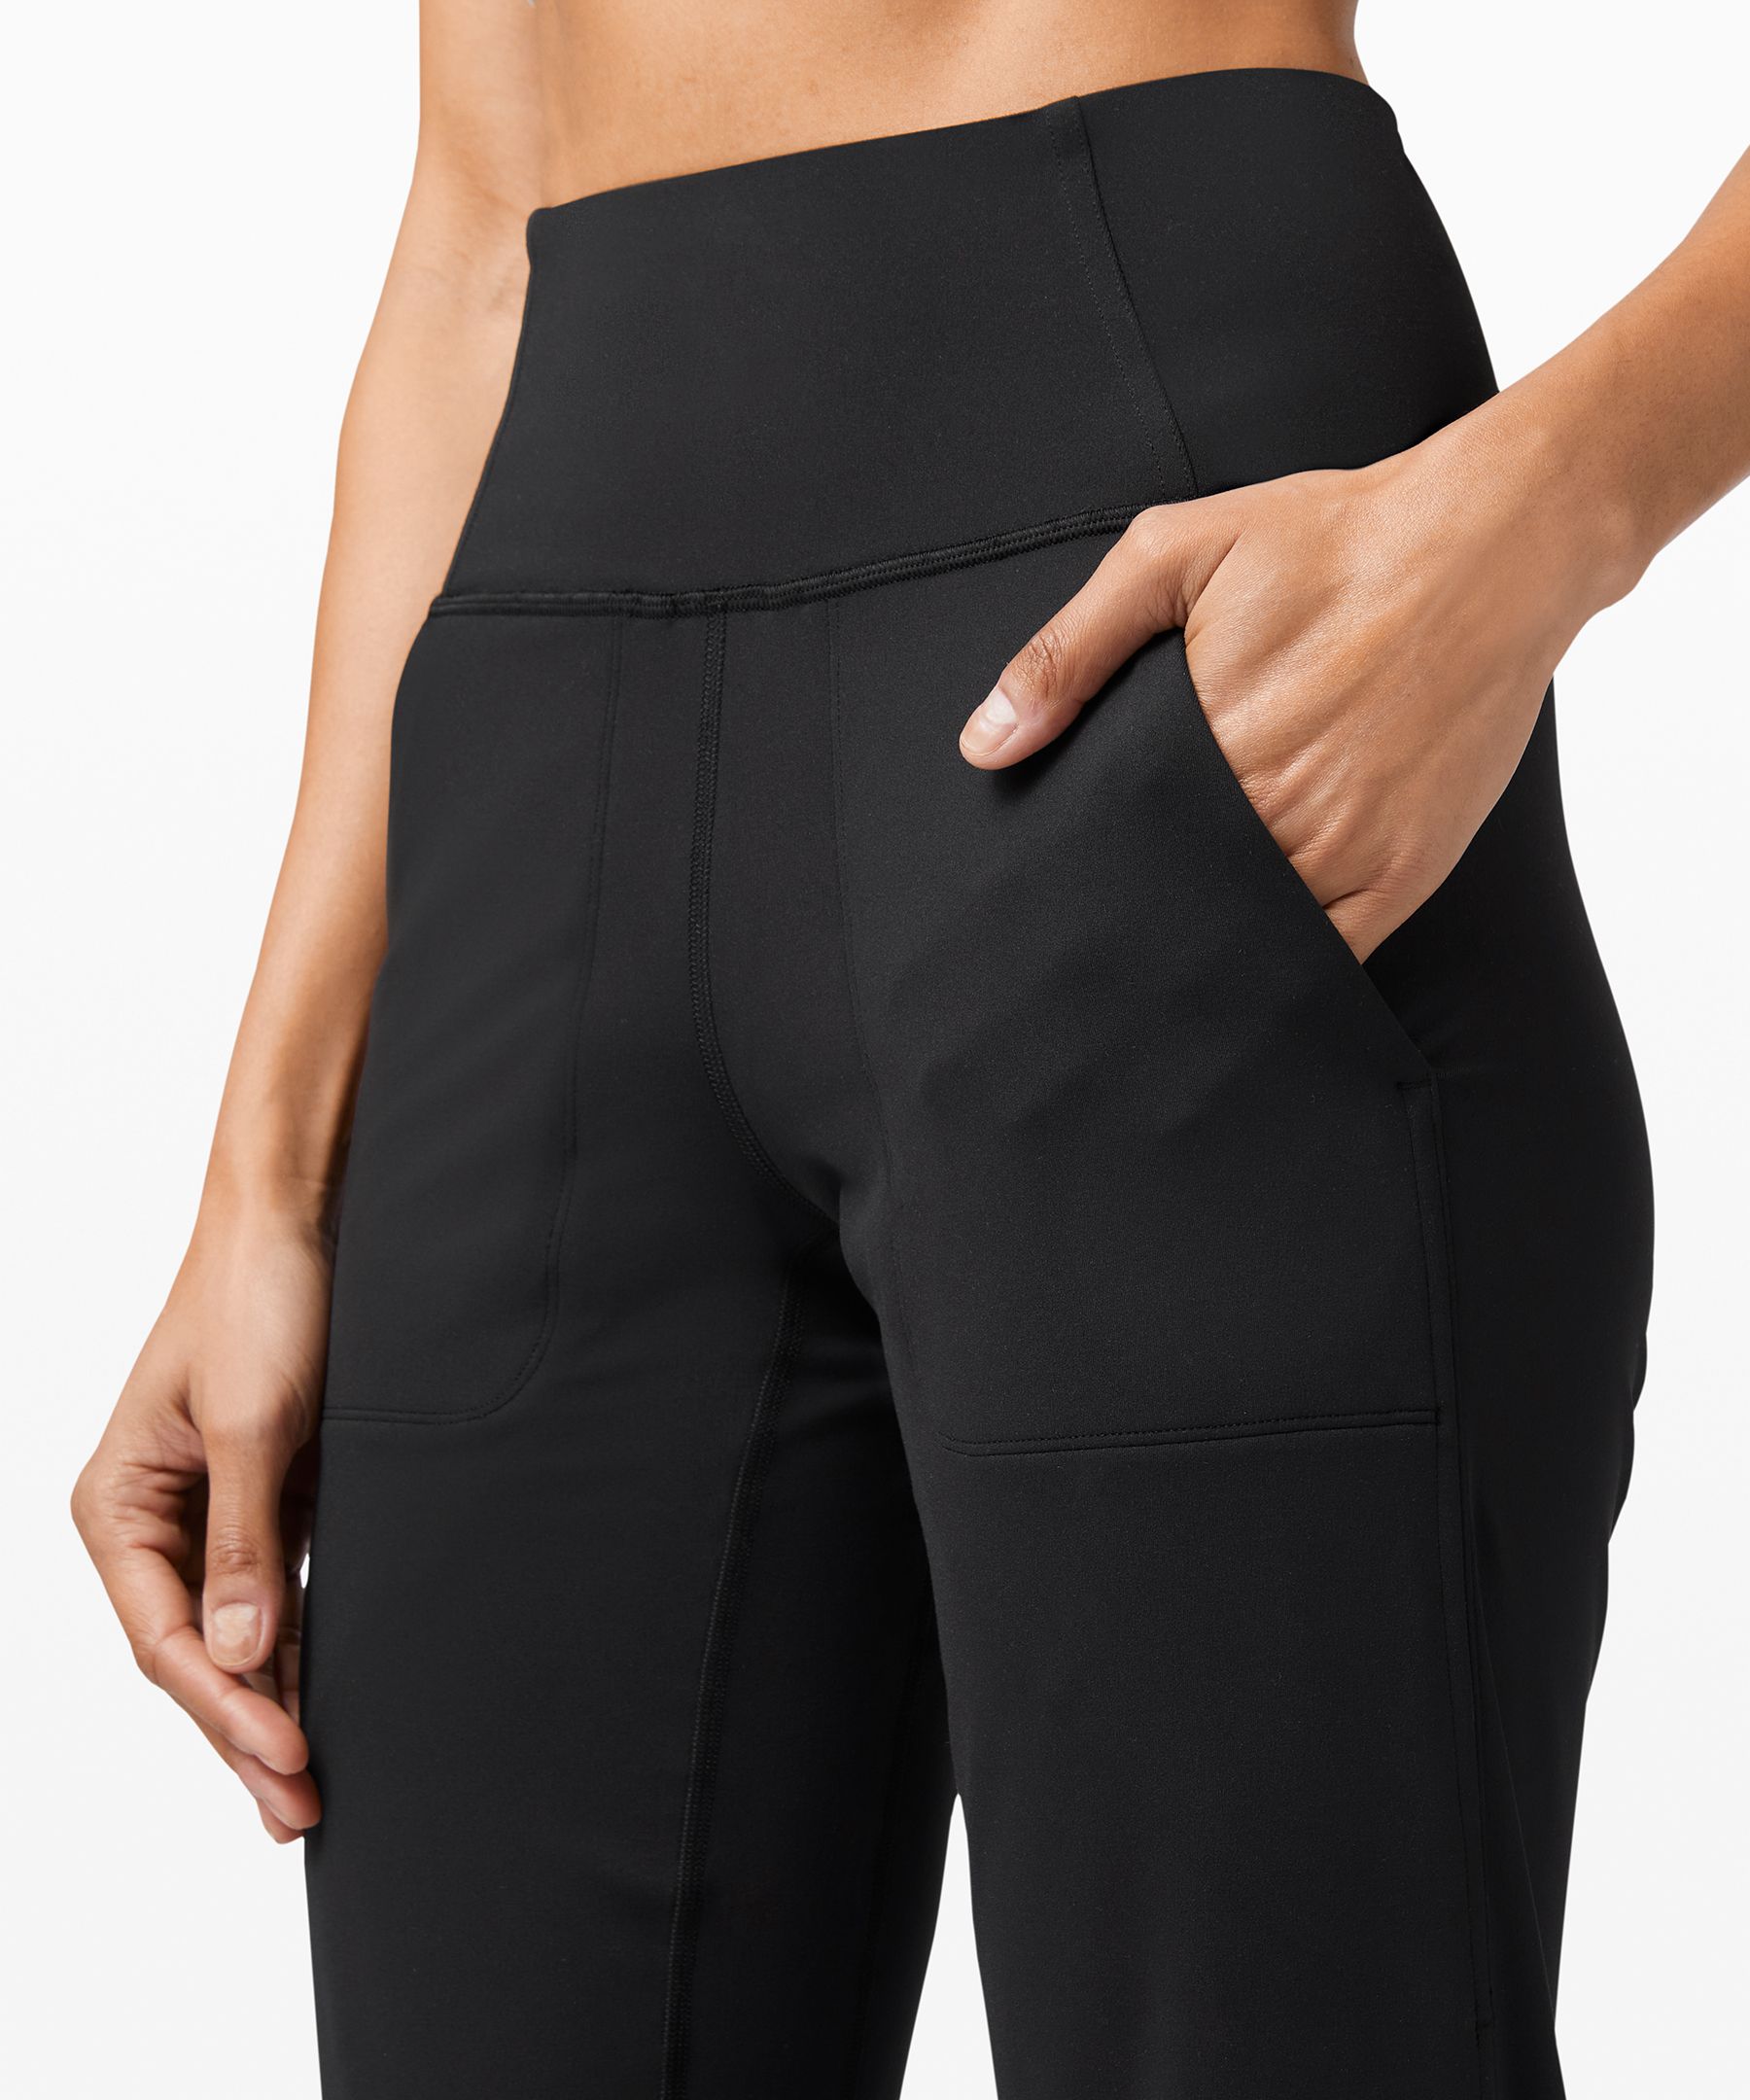 Align Jogger 28  Yoga pants lululemon, Lululemon align joggers, Yoga pants  women